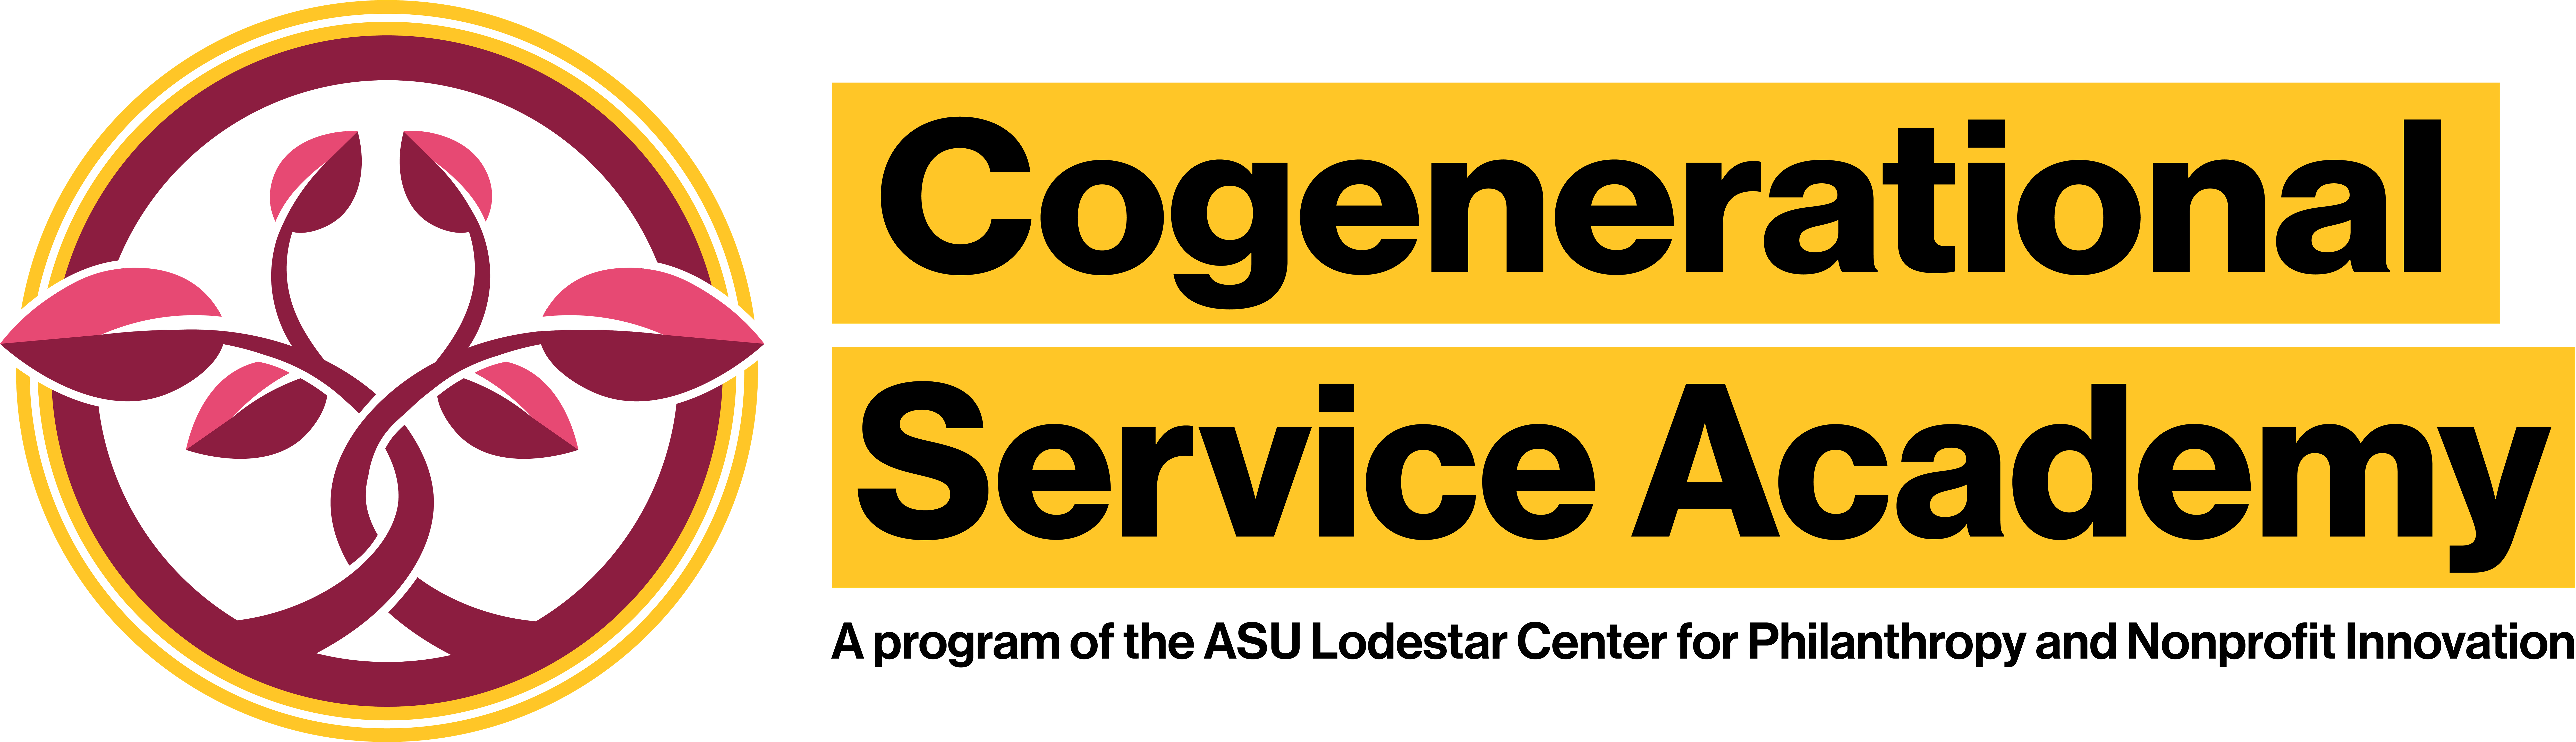 Cogenerational Service Academy